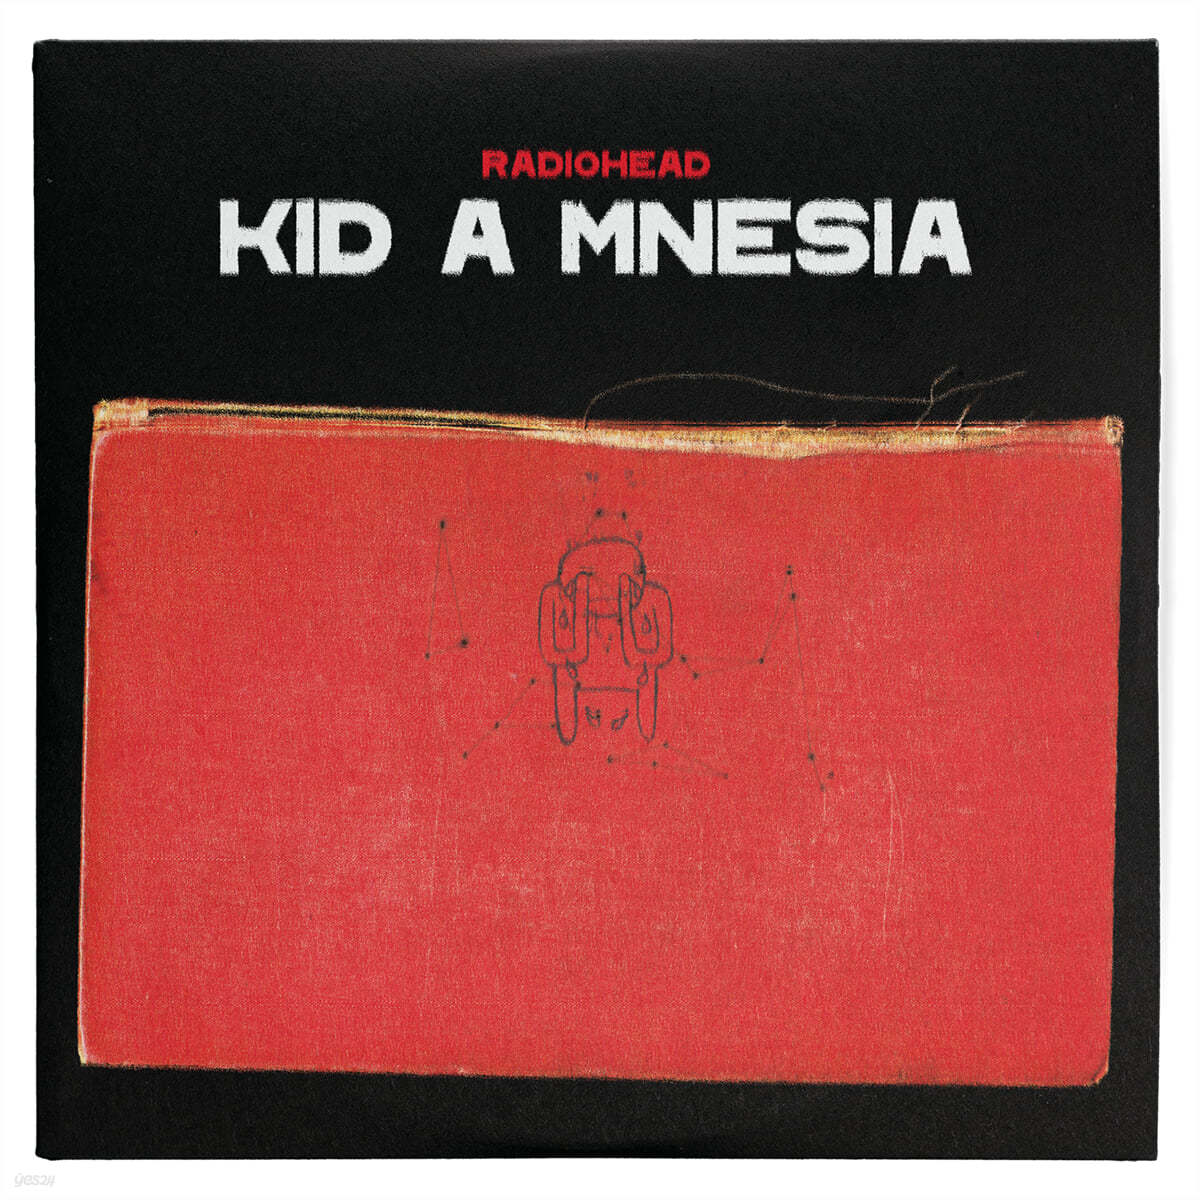 Radiohead (라디오헤드) - KID A MNESIA